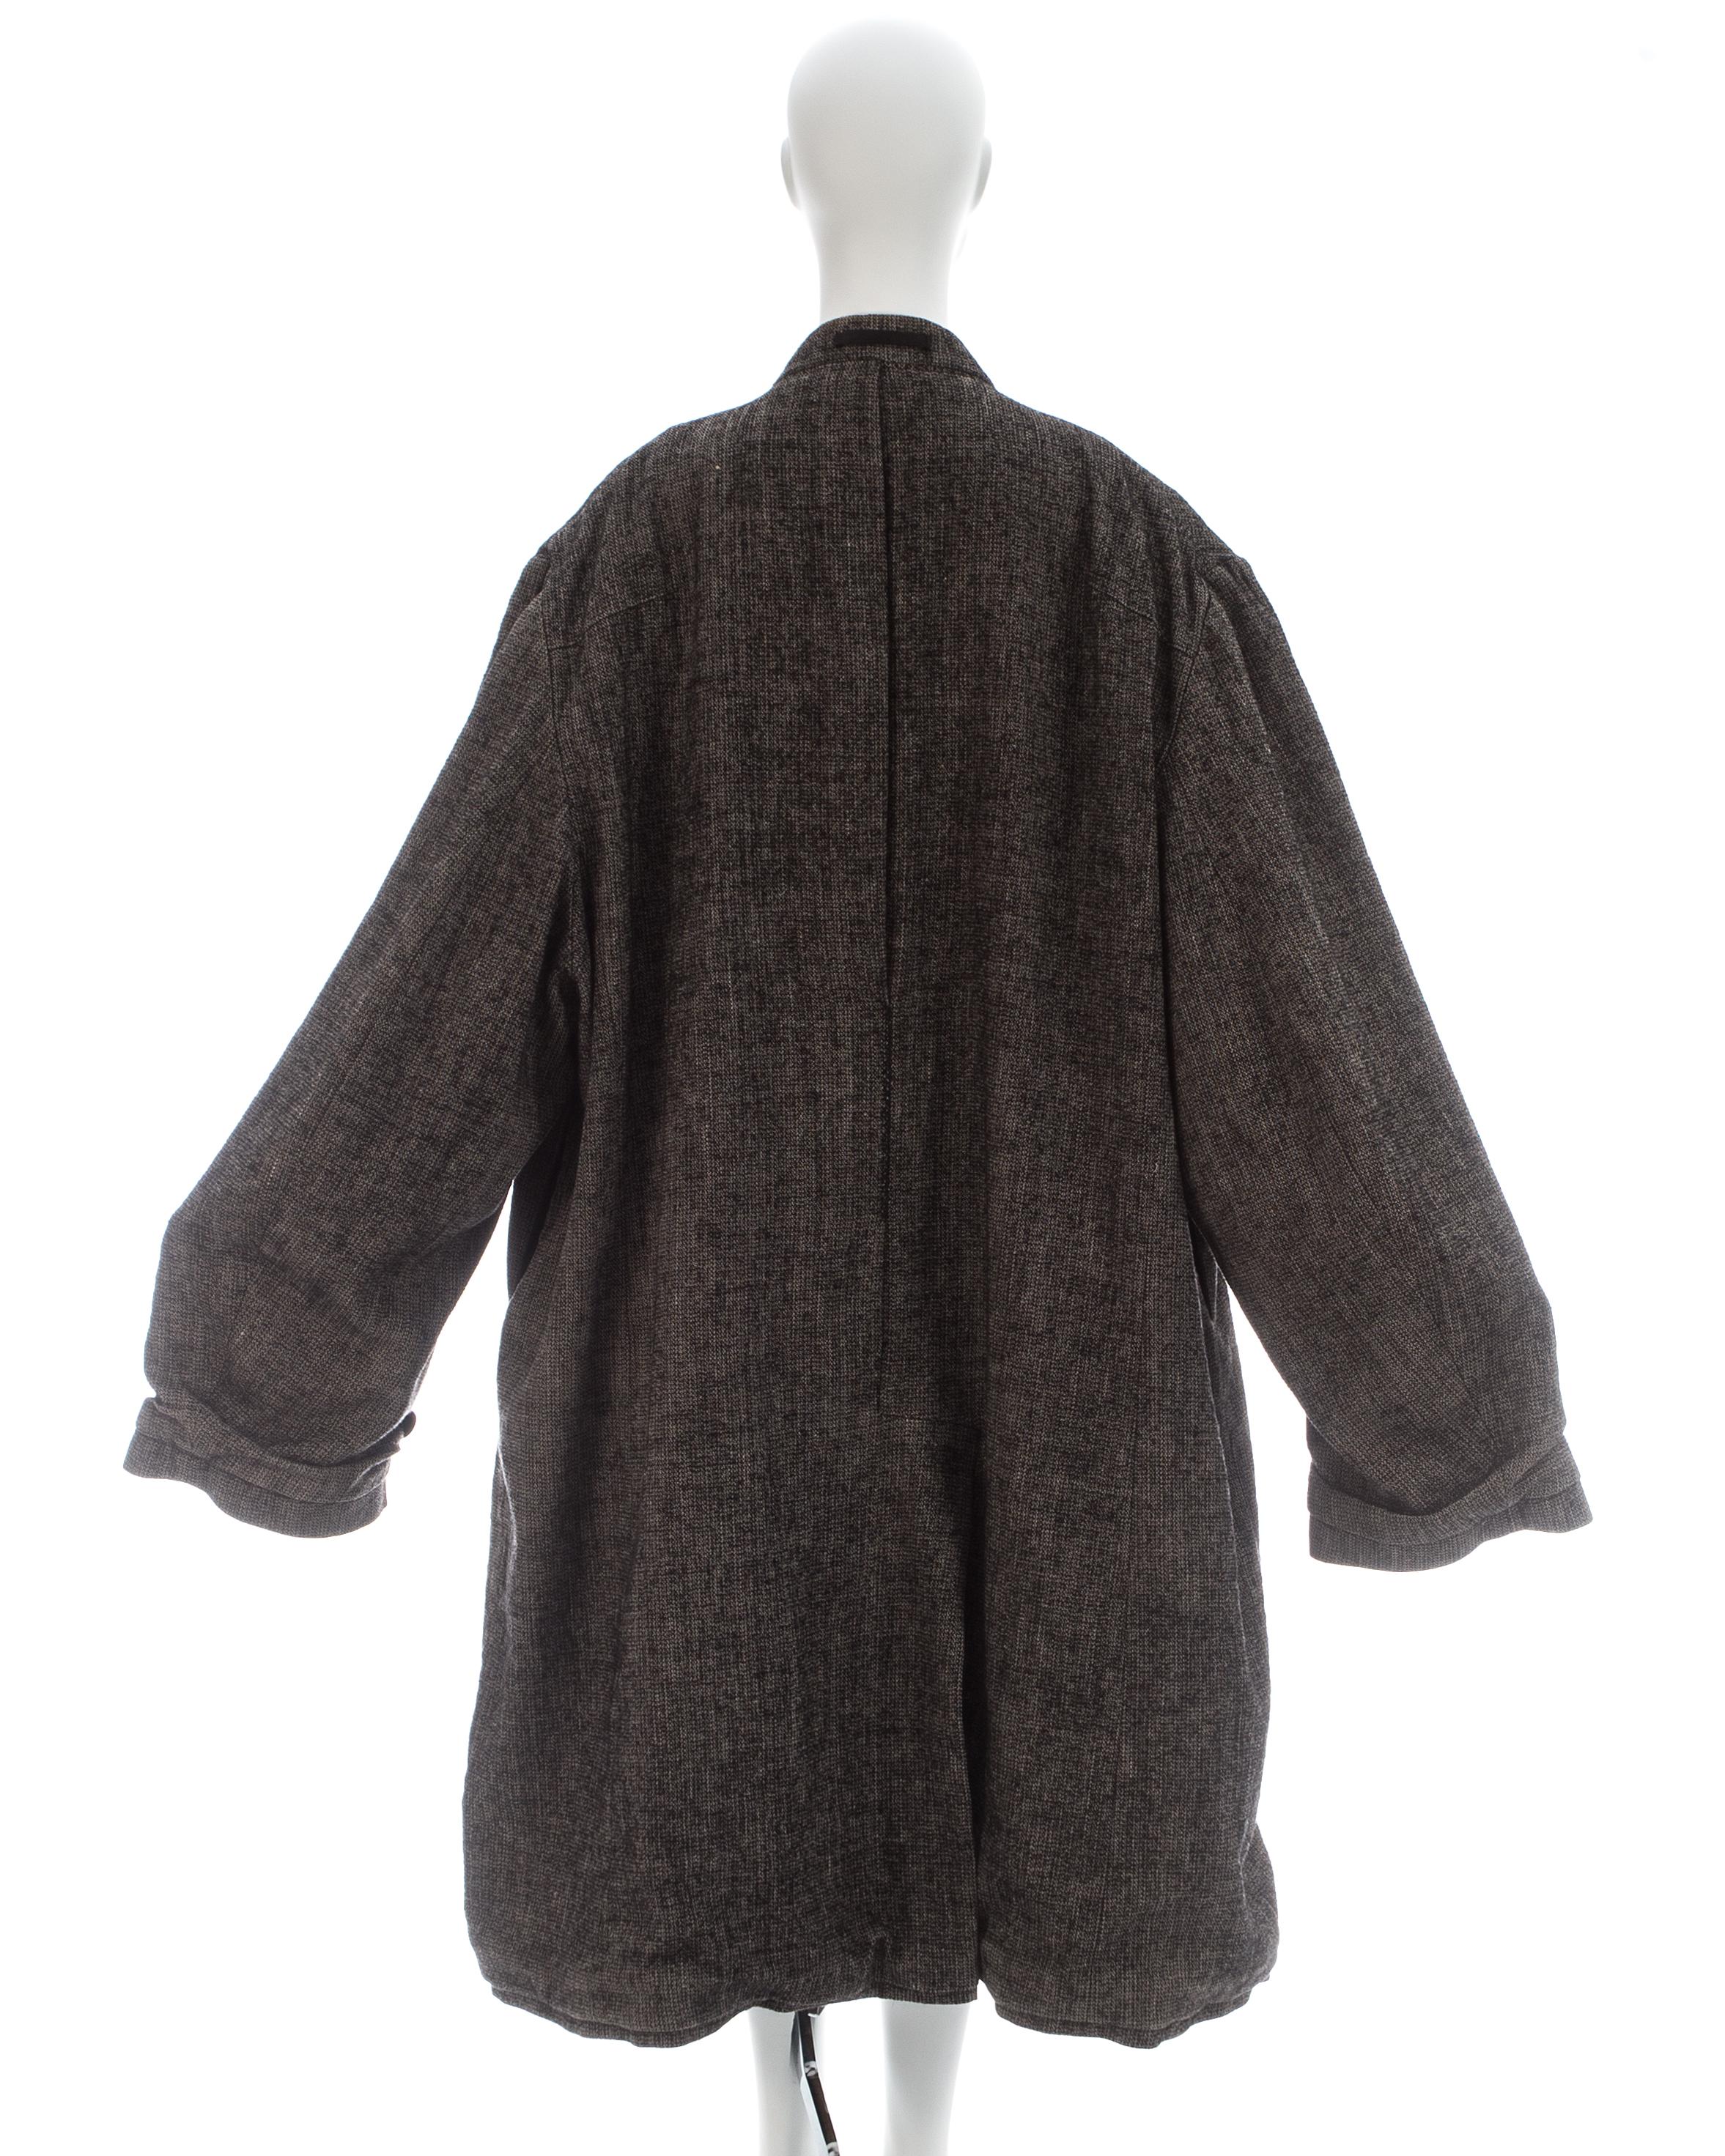 Martin Margiela grey wool and linen XXL size 78 double inside coat, fw 2000 4